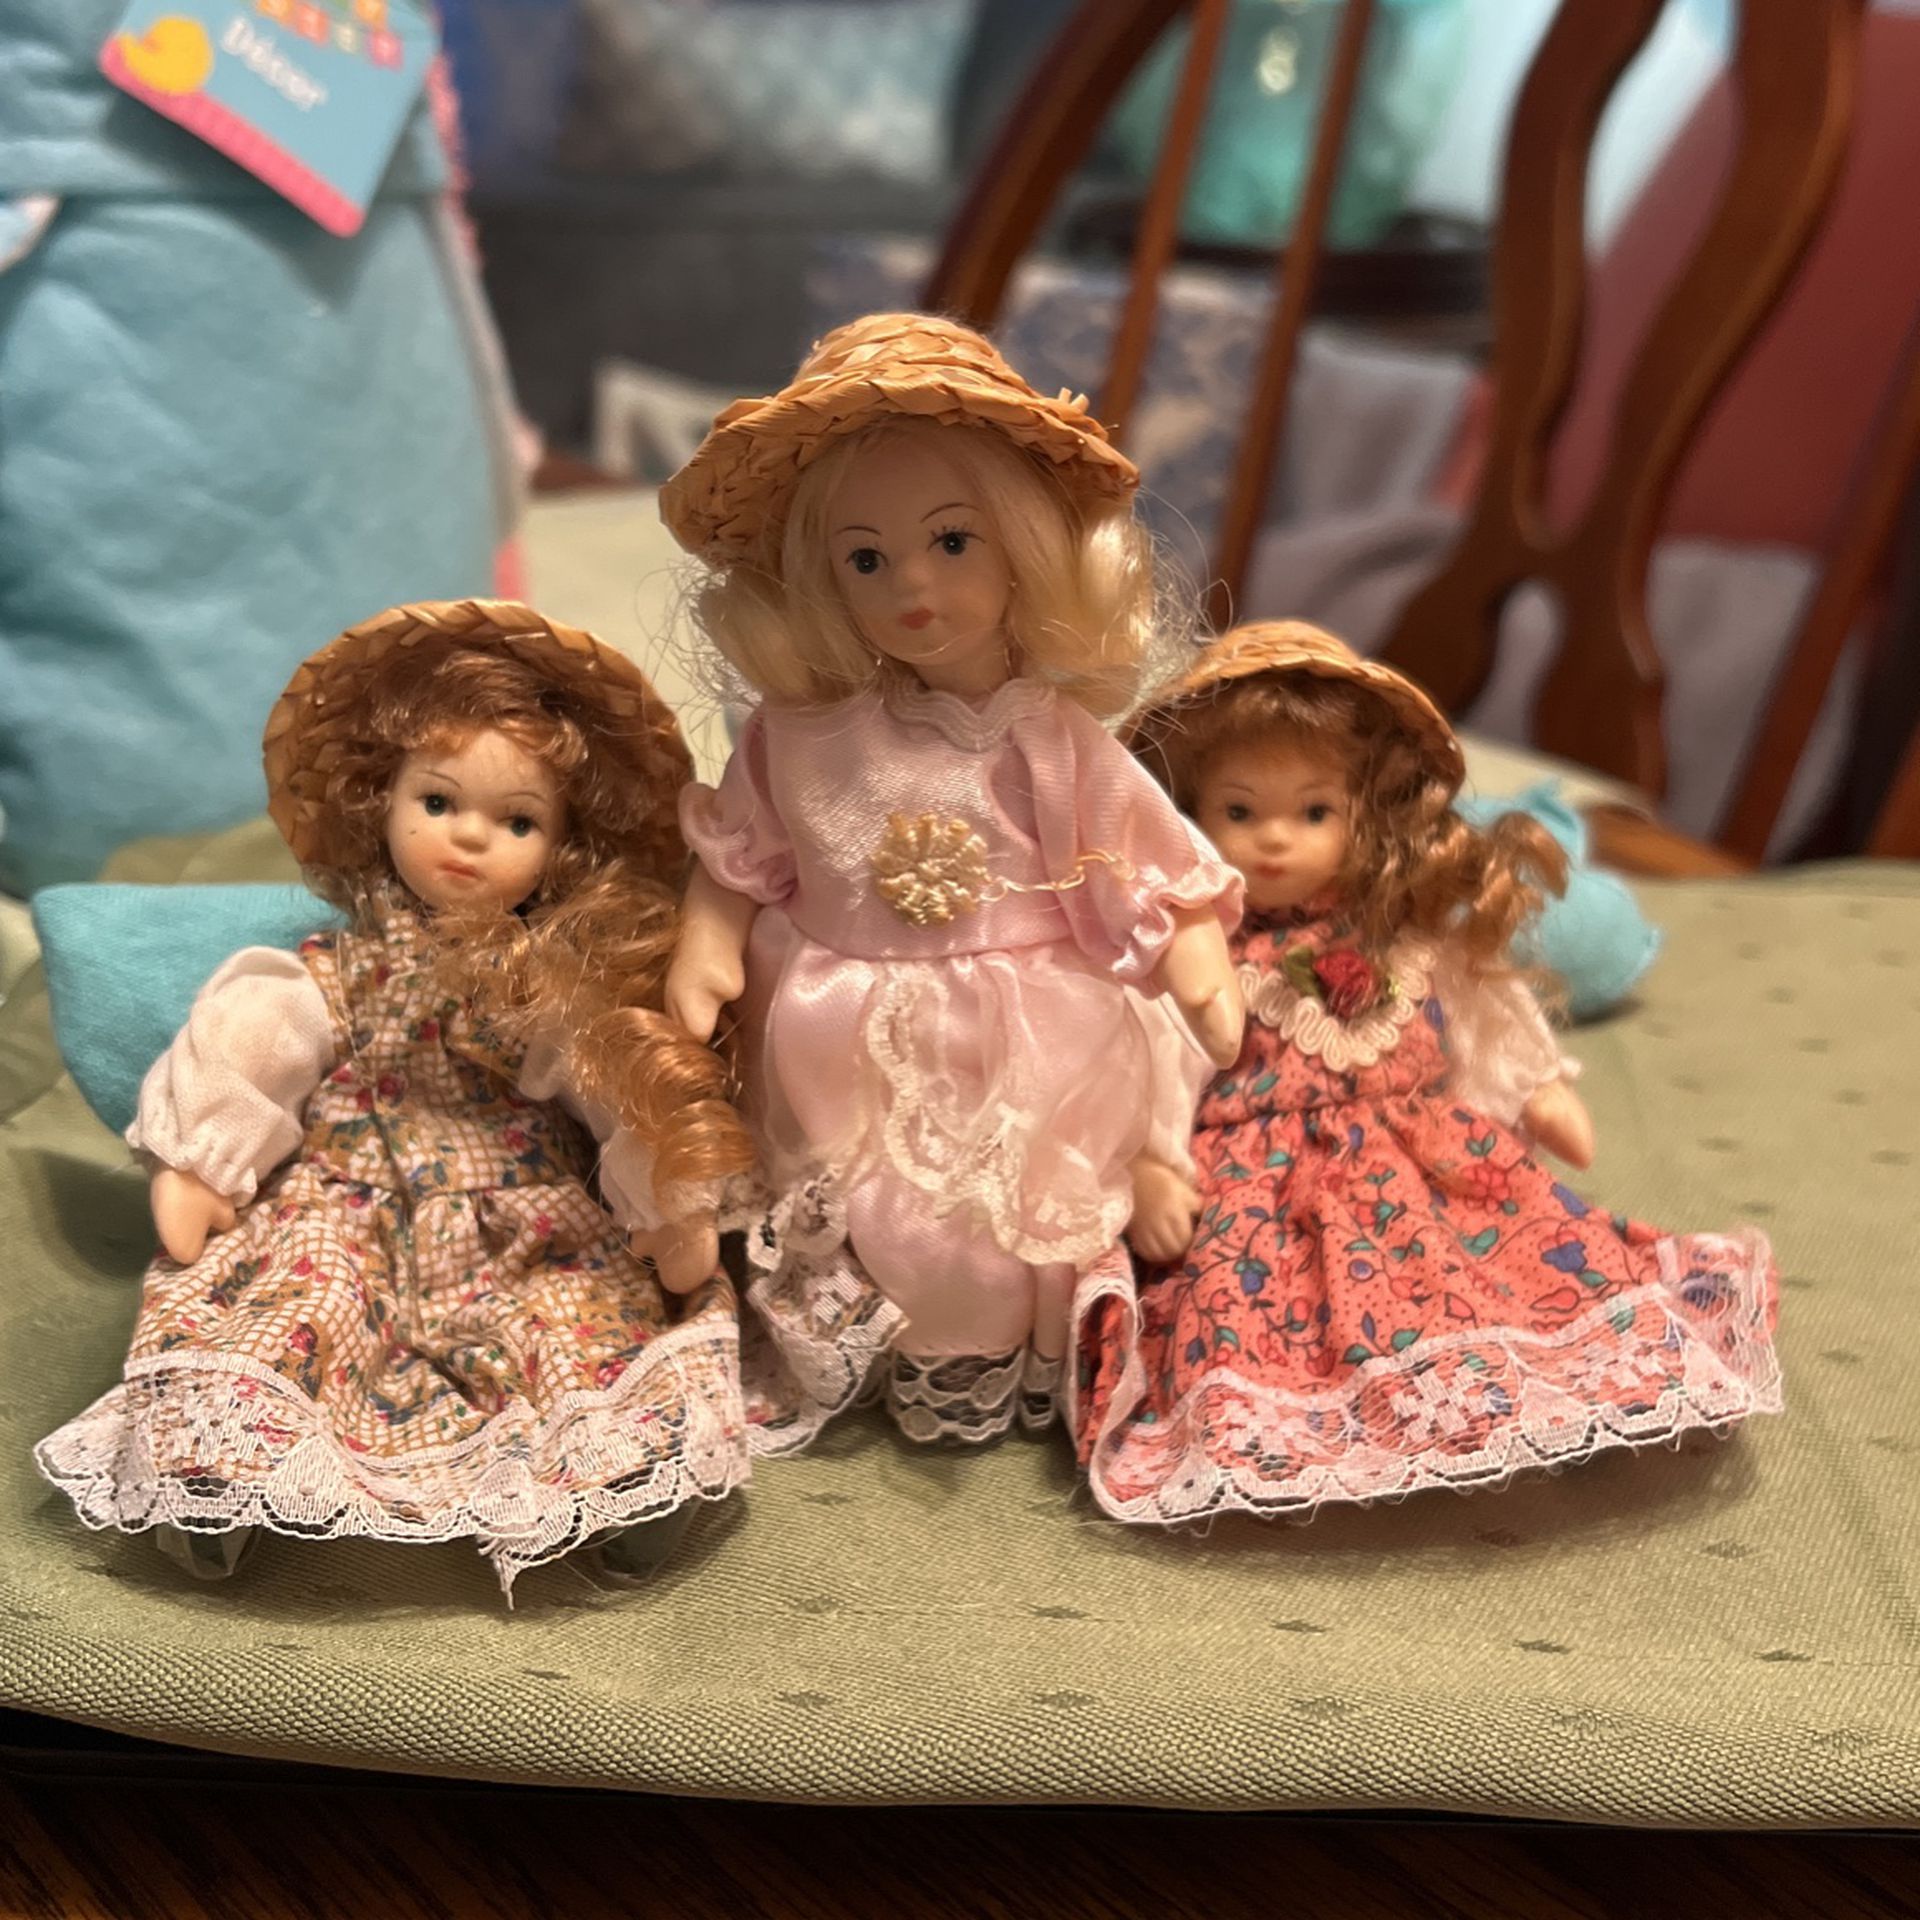 3 Small Porcelain Dolls